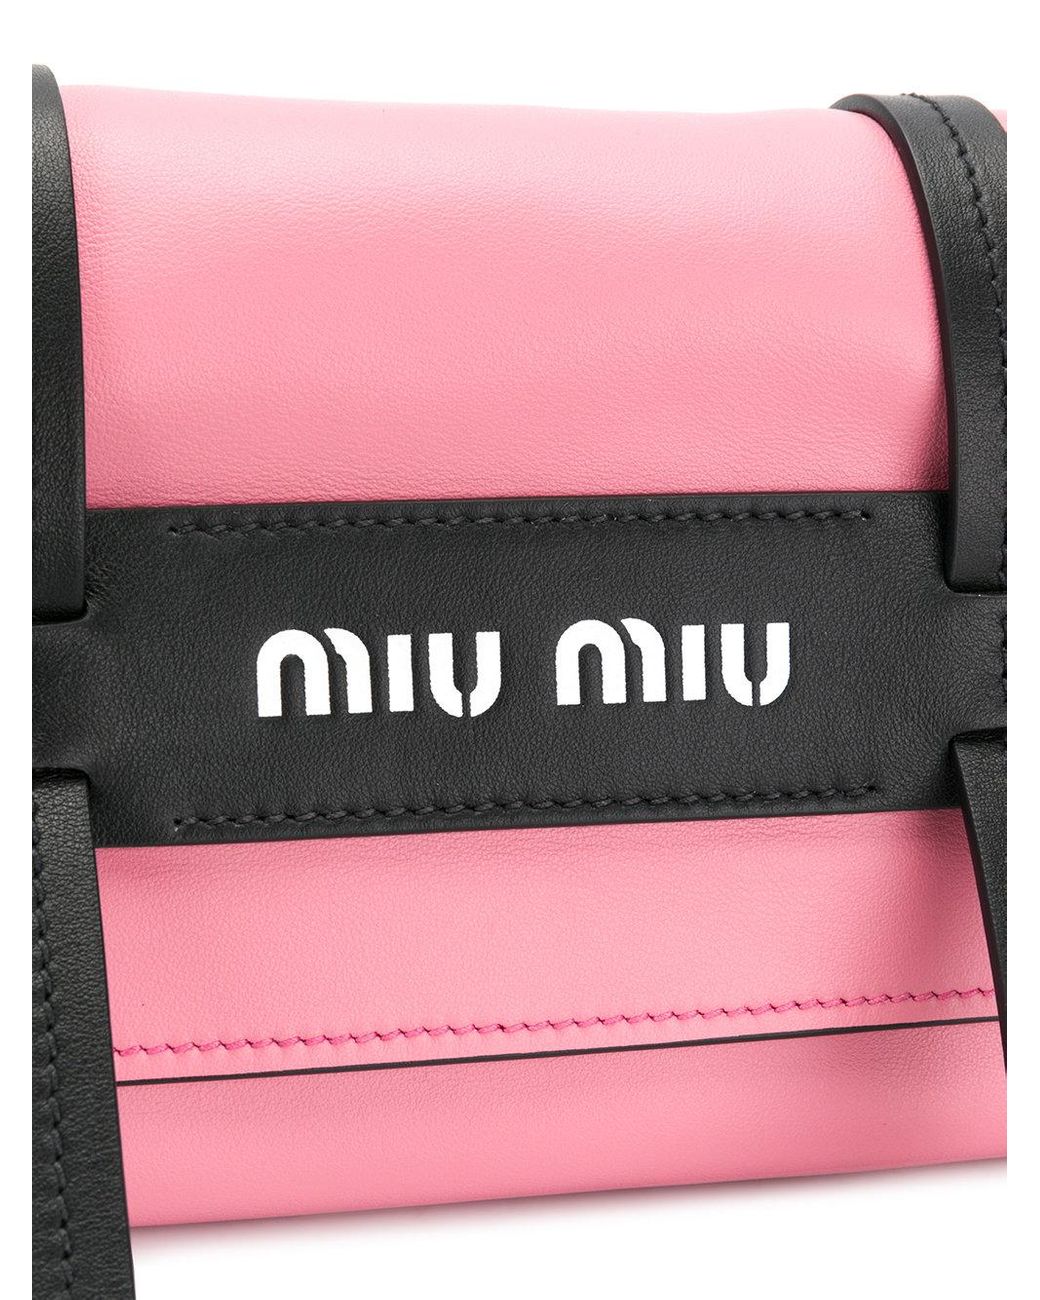 Miu Miu grace lux crossbody bag powder pink + caramel